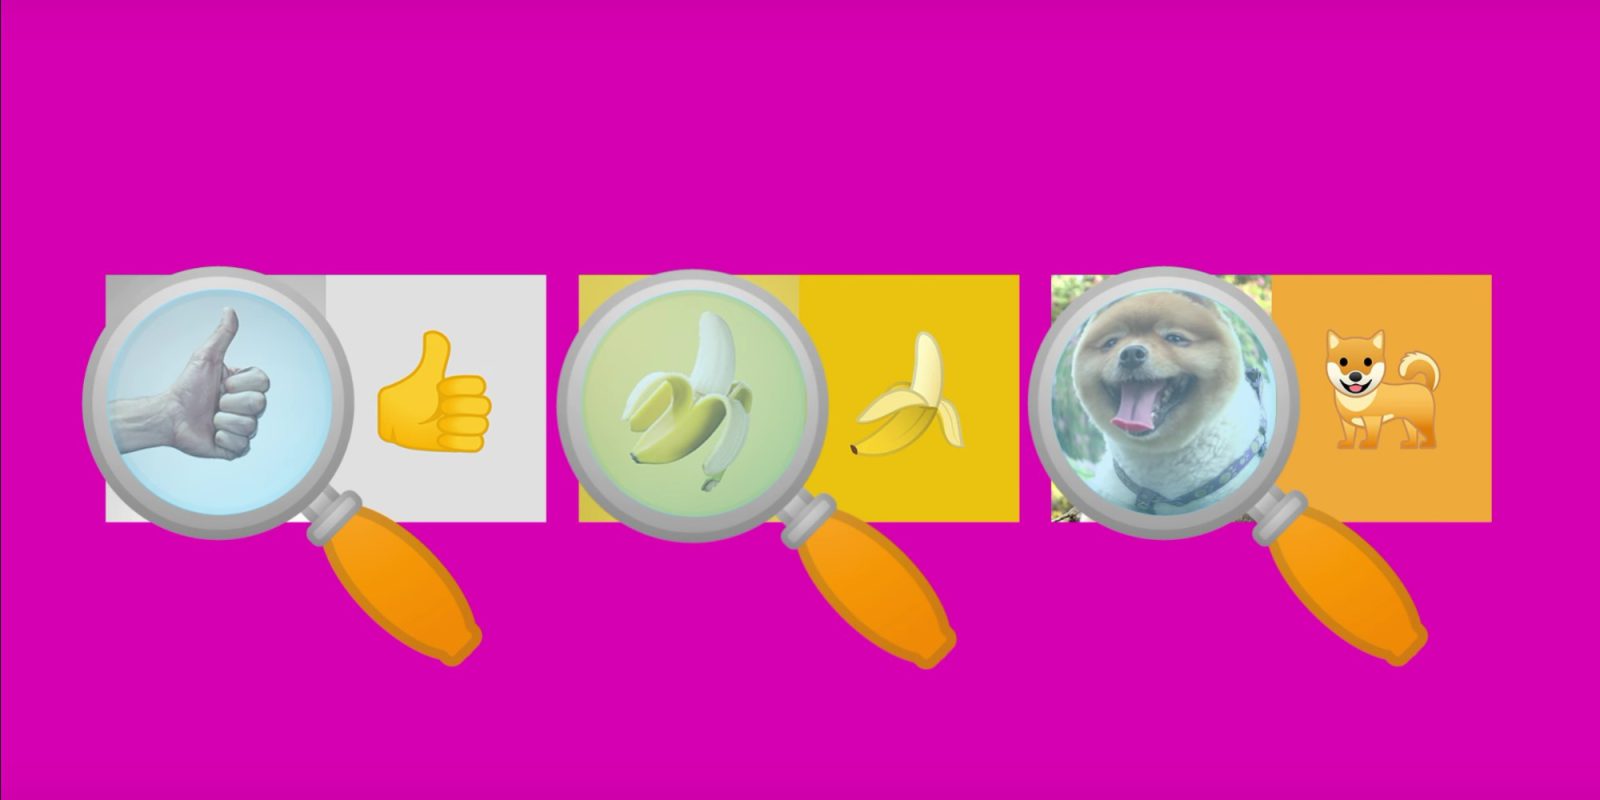 Google released the game Emoji Scavenger Hunt for "hunting" emoji in the real world